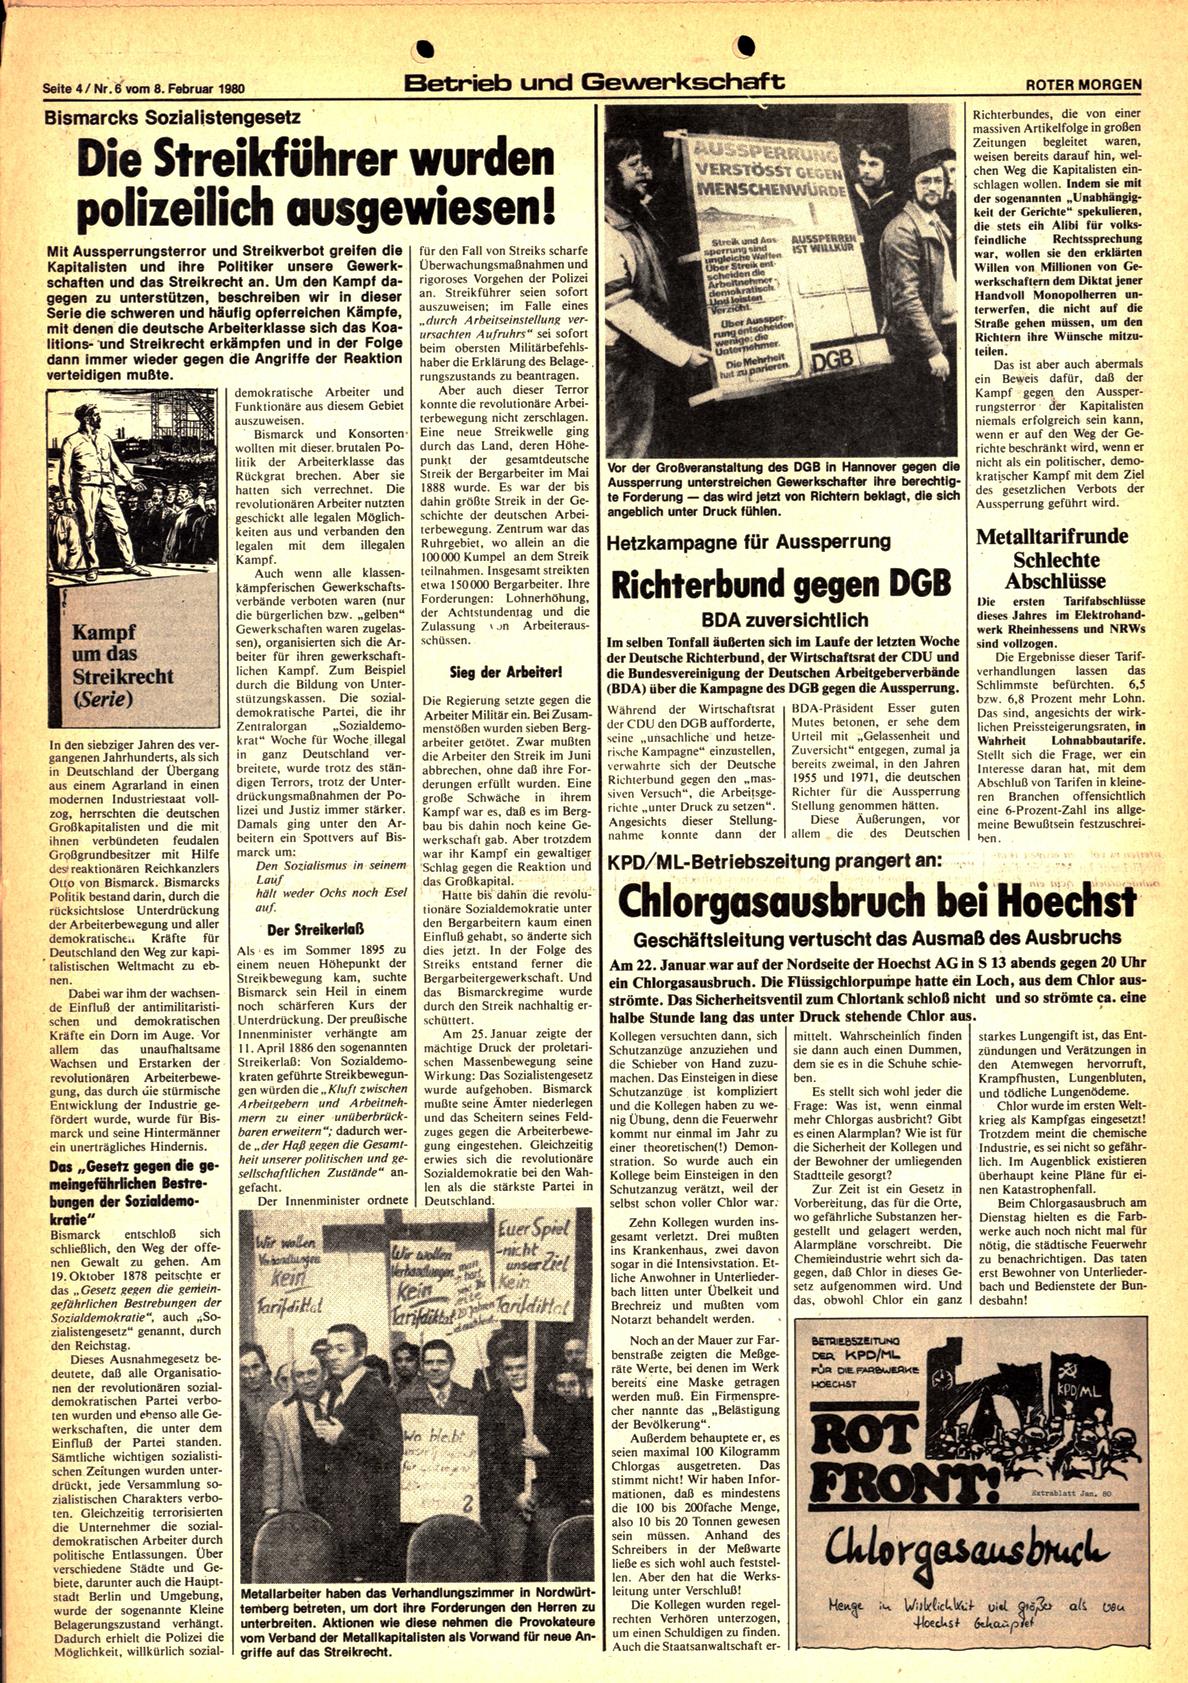 Roter Morgen, 14. Jg., 8. Februar 1980, Nr. 6, Seite 4